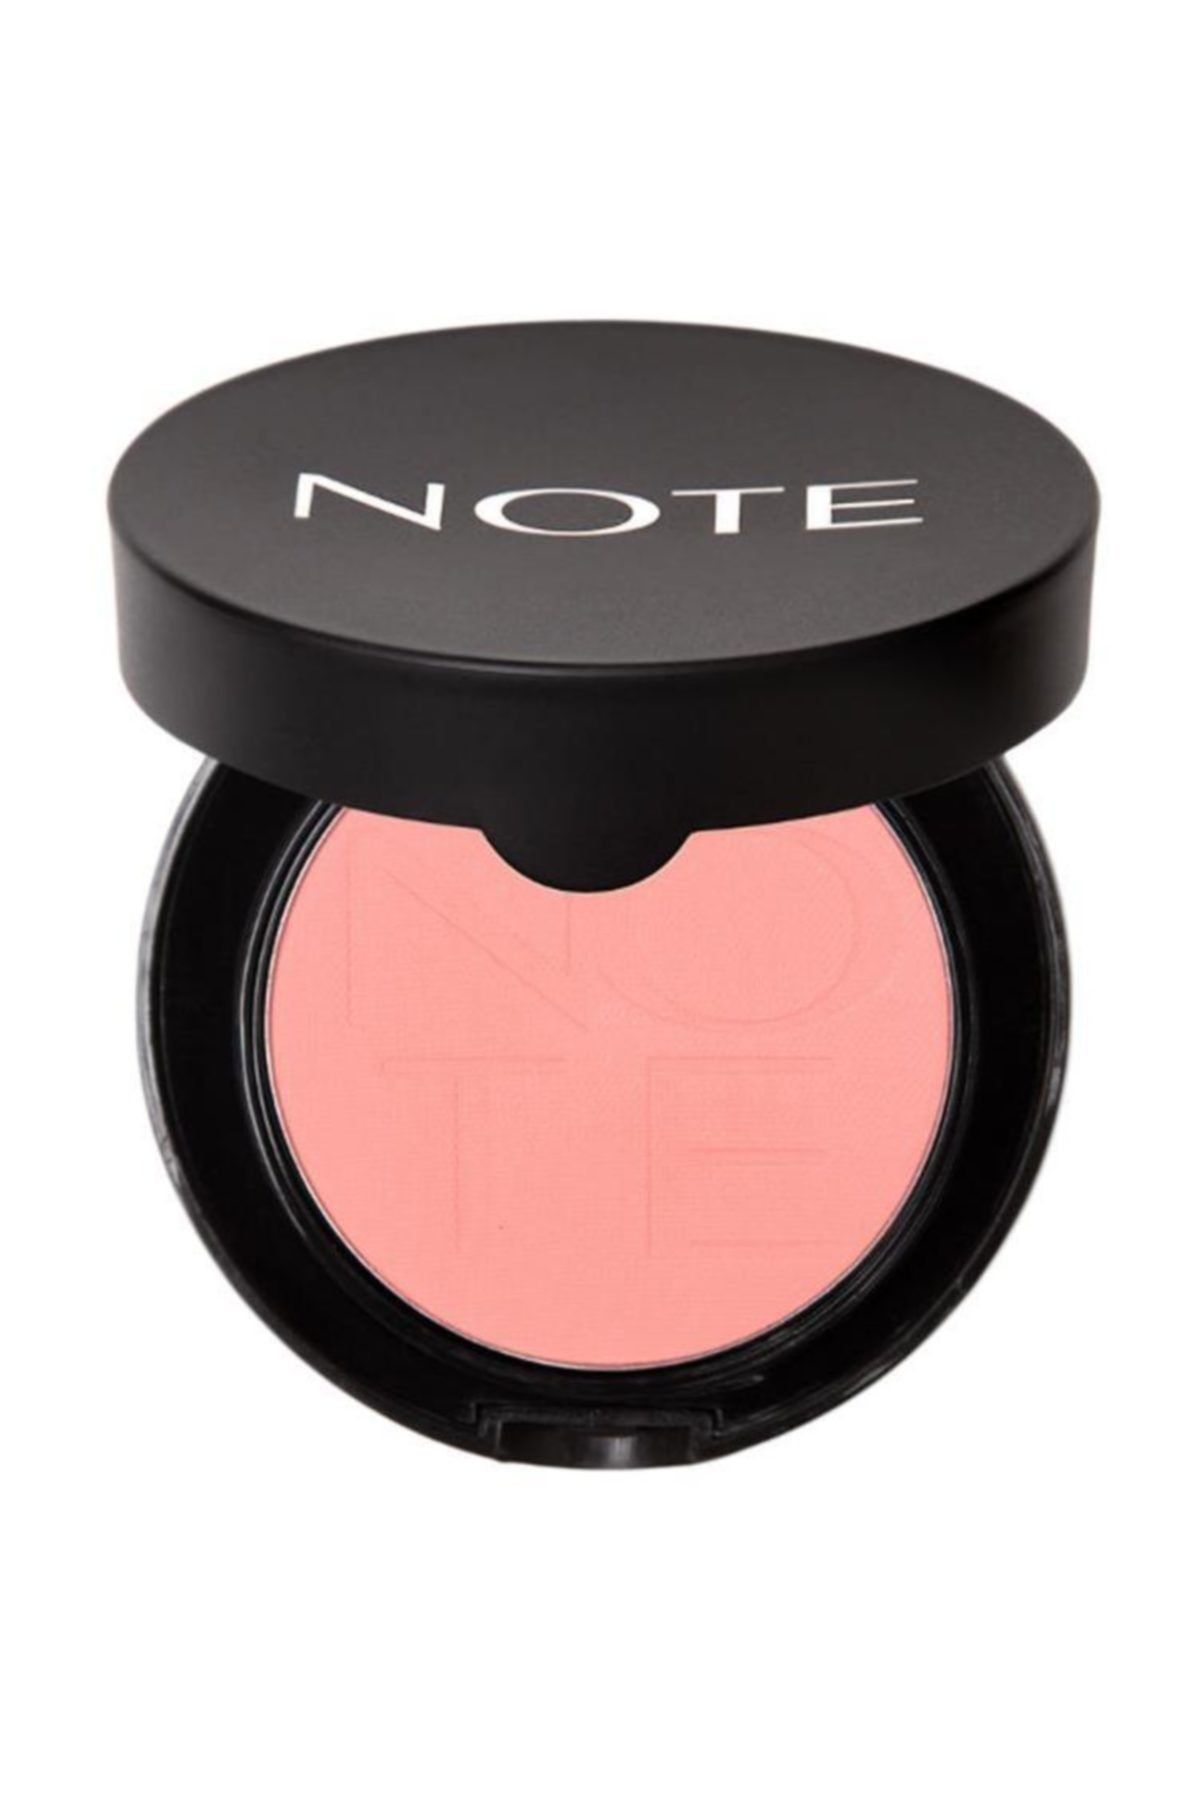 Note Cosmetics Luminous Silk Compact Blusher 06 Sandy Pink